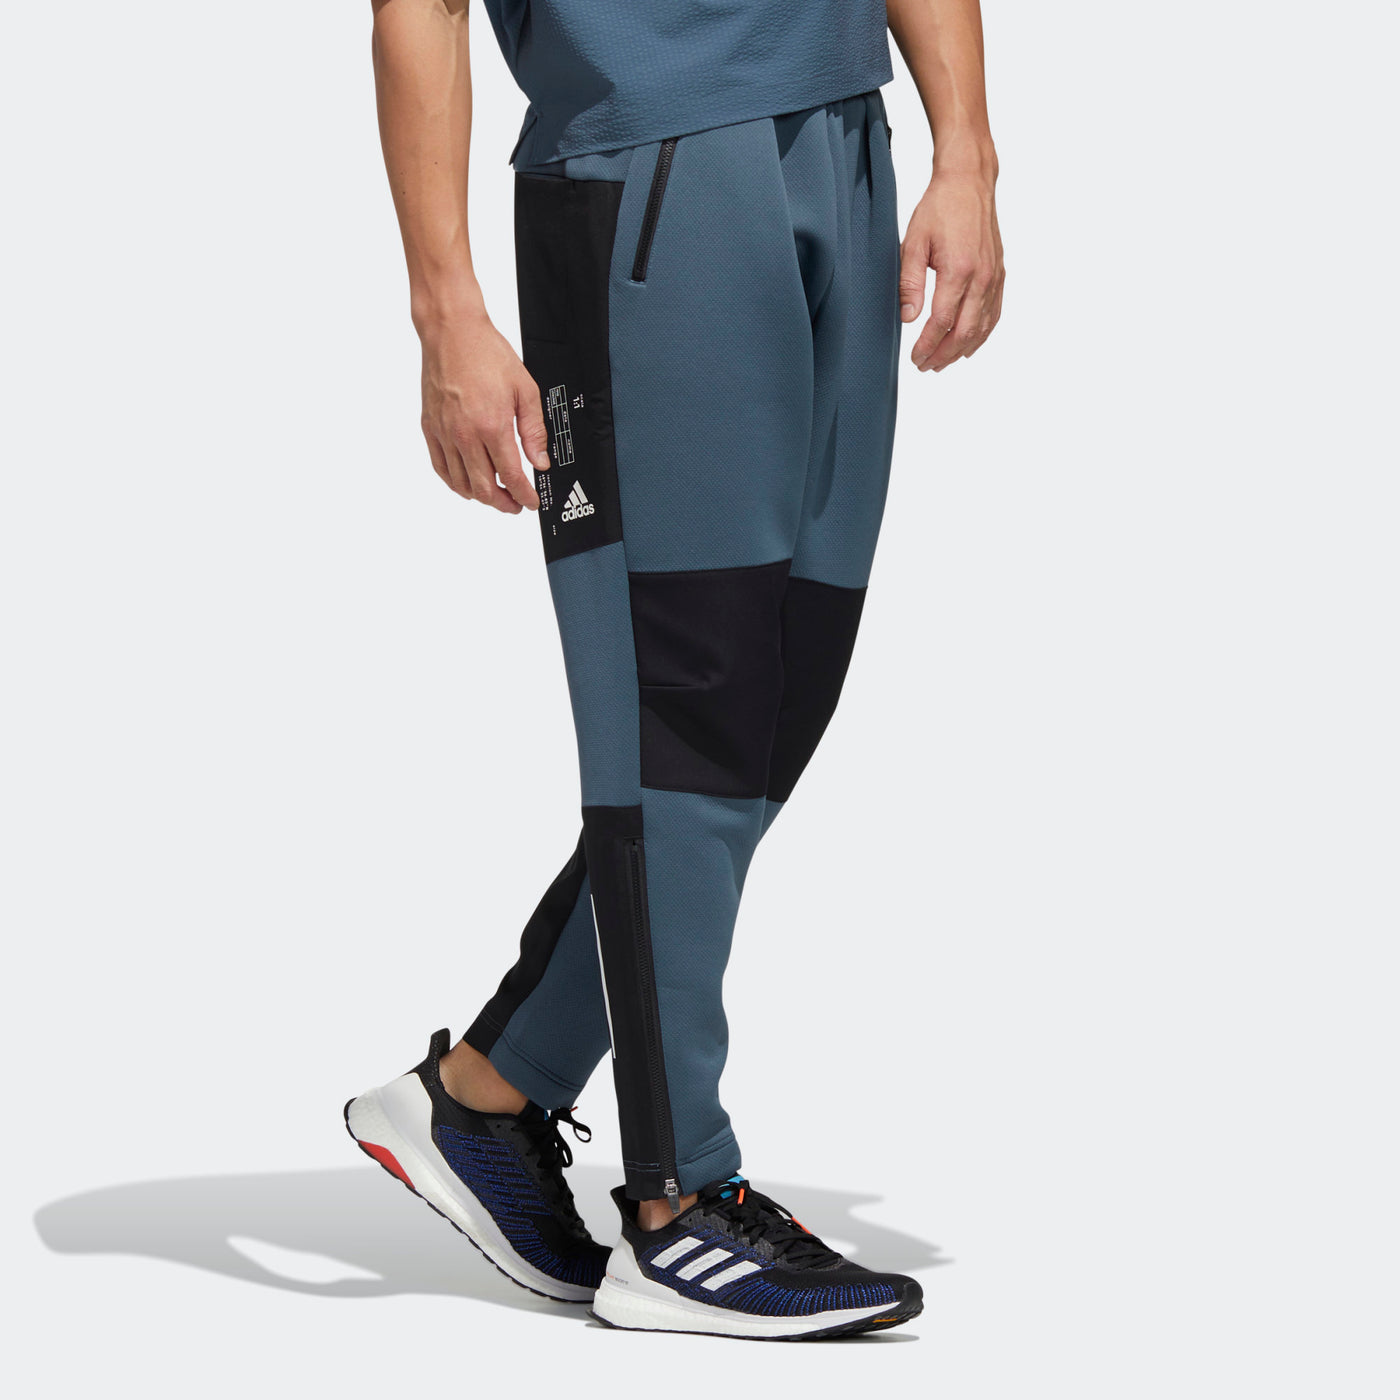 Adidas Tech Doubleknit Men's Pants